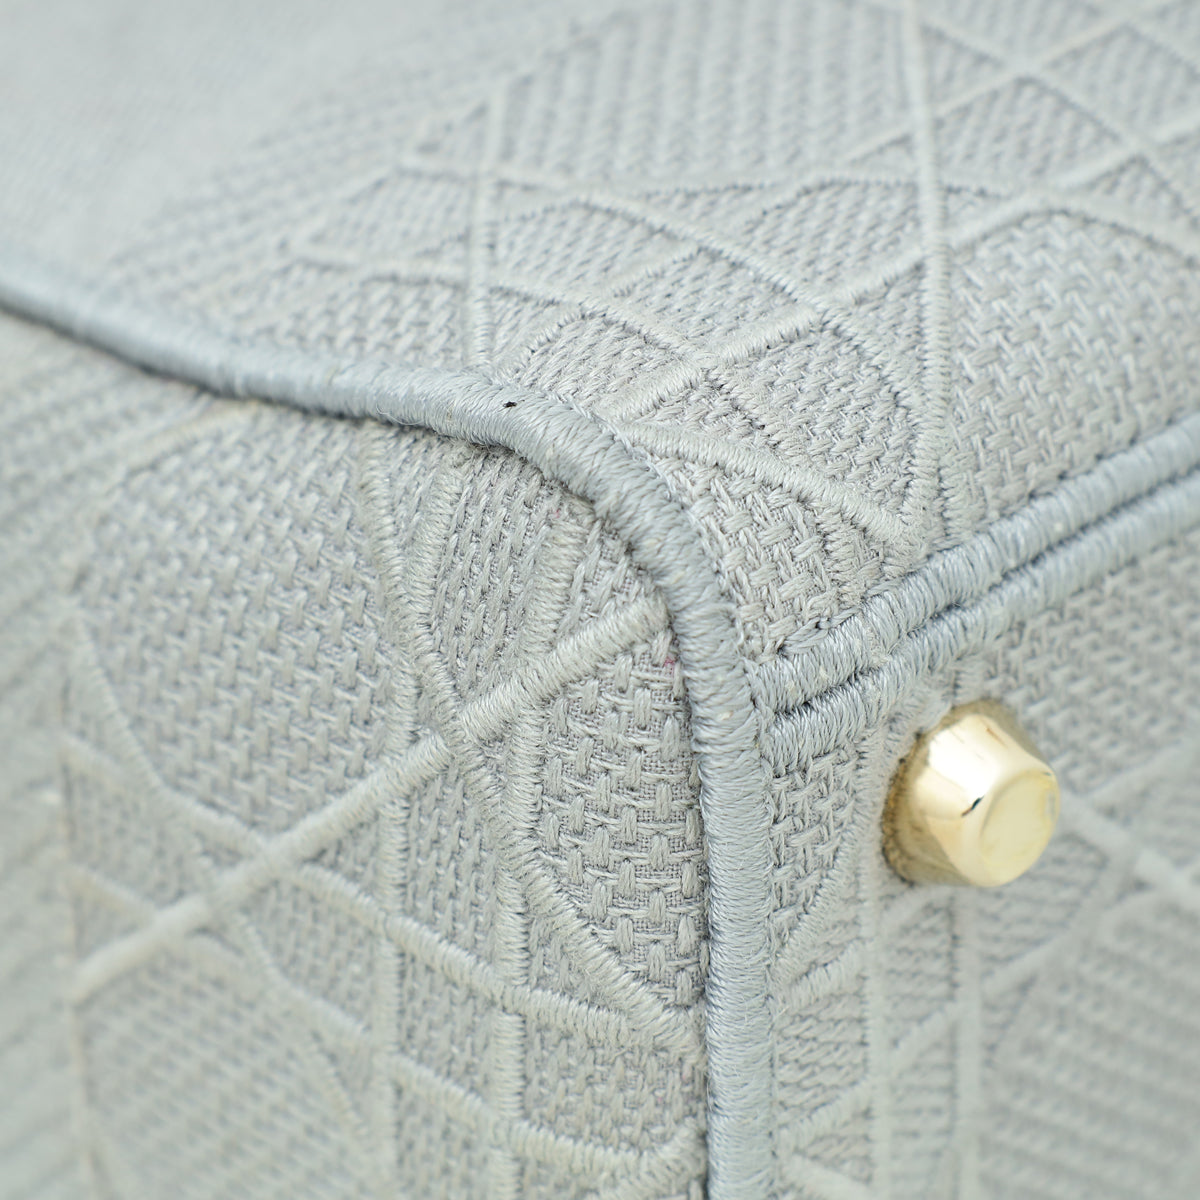 Christian Dior Grey Lady D-lite Cannage Embroidery Medium Bag